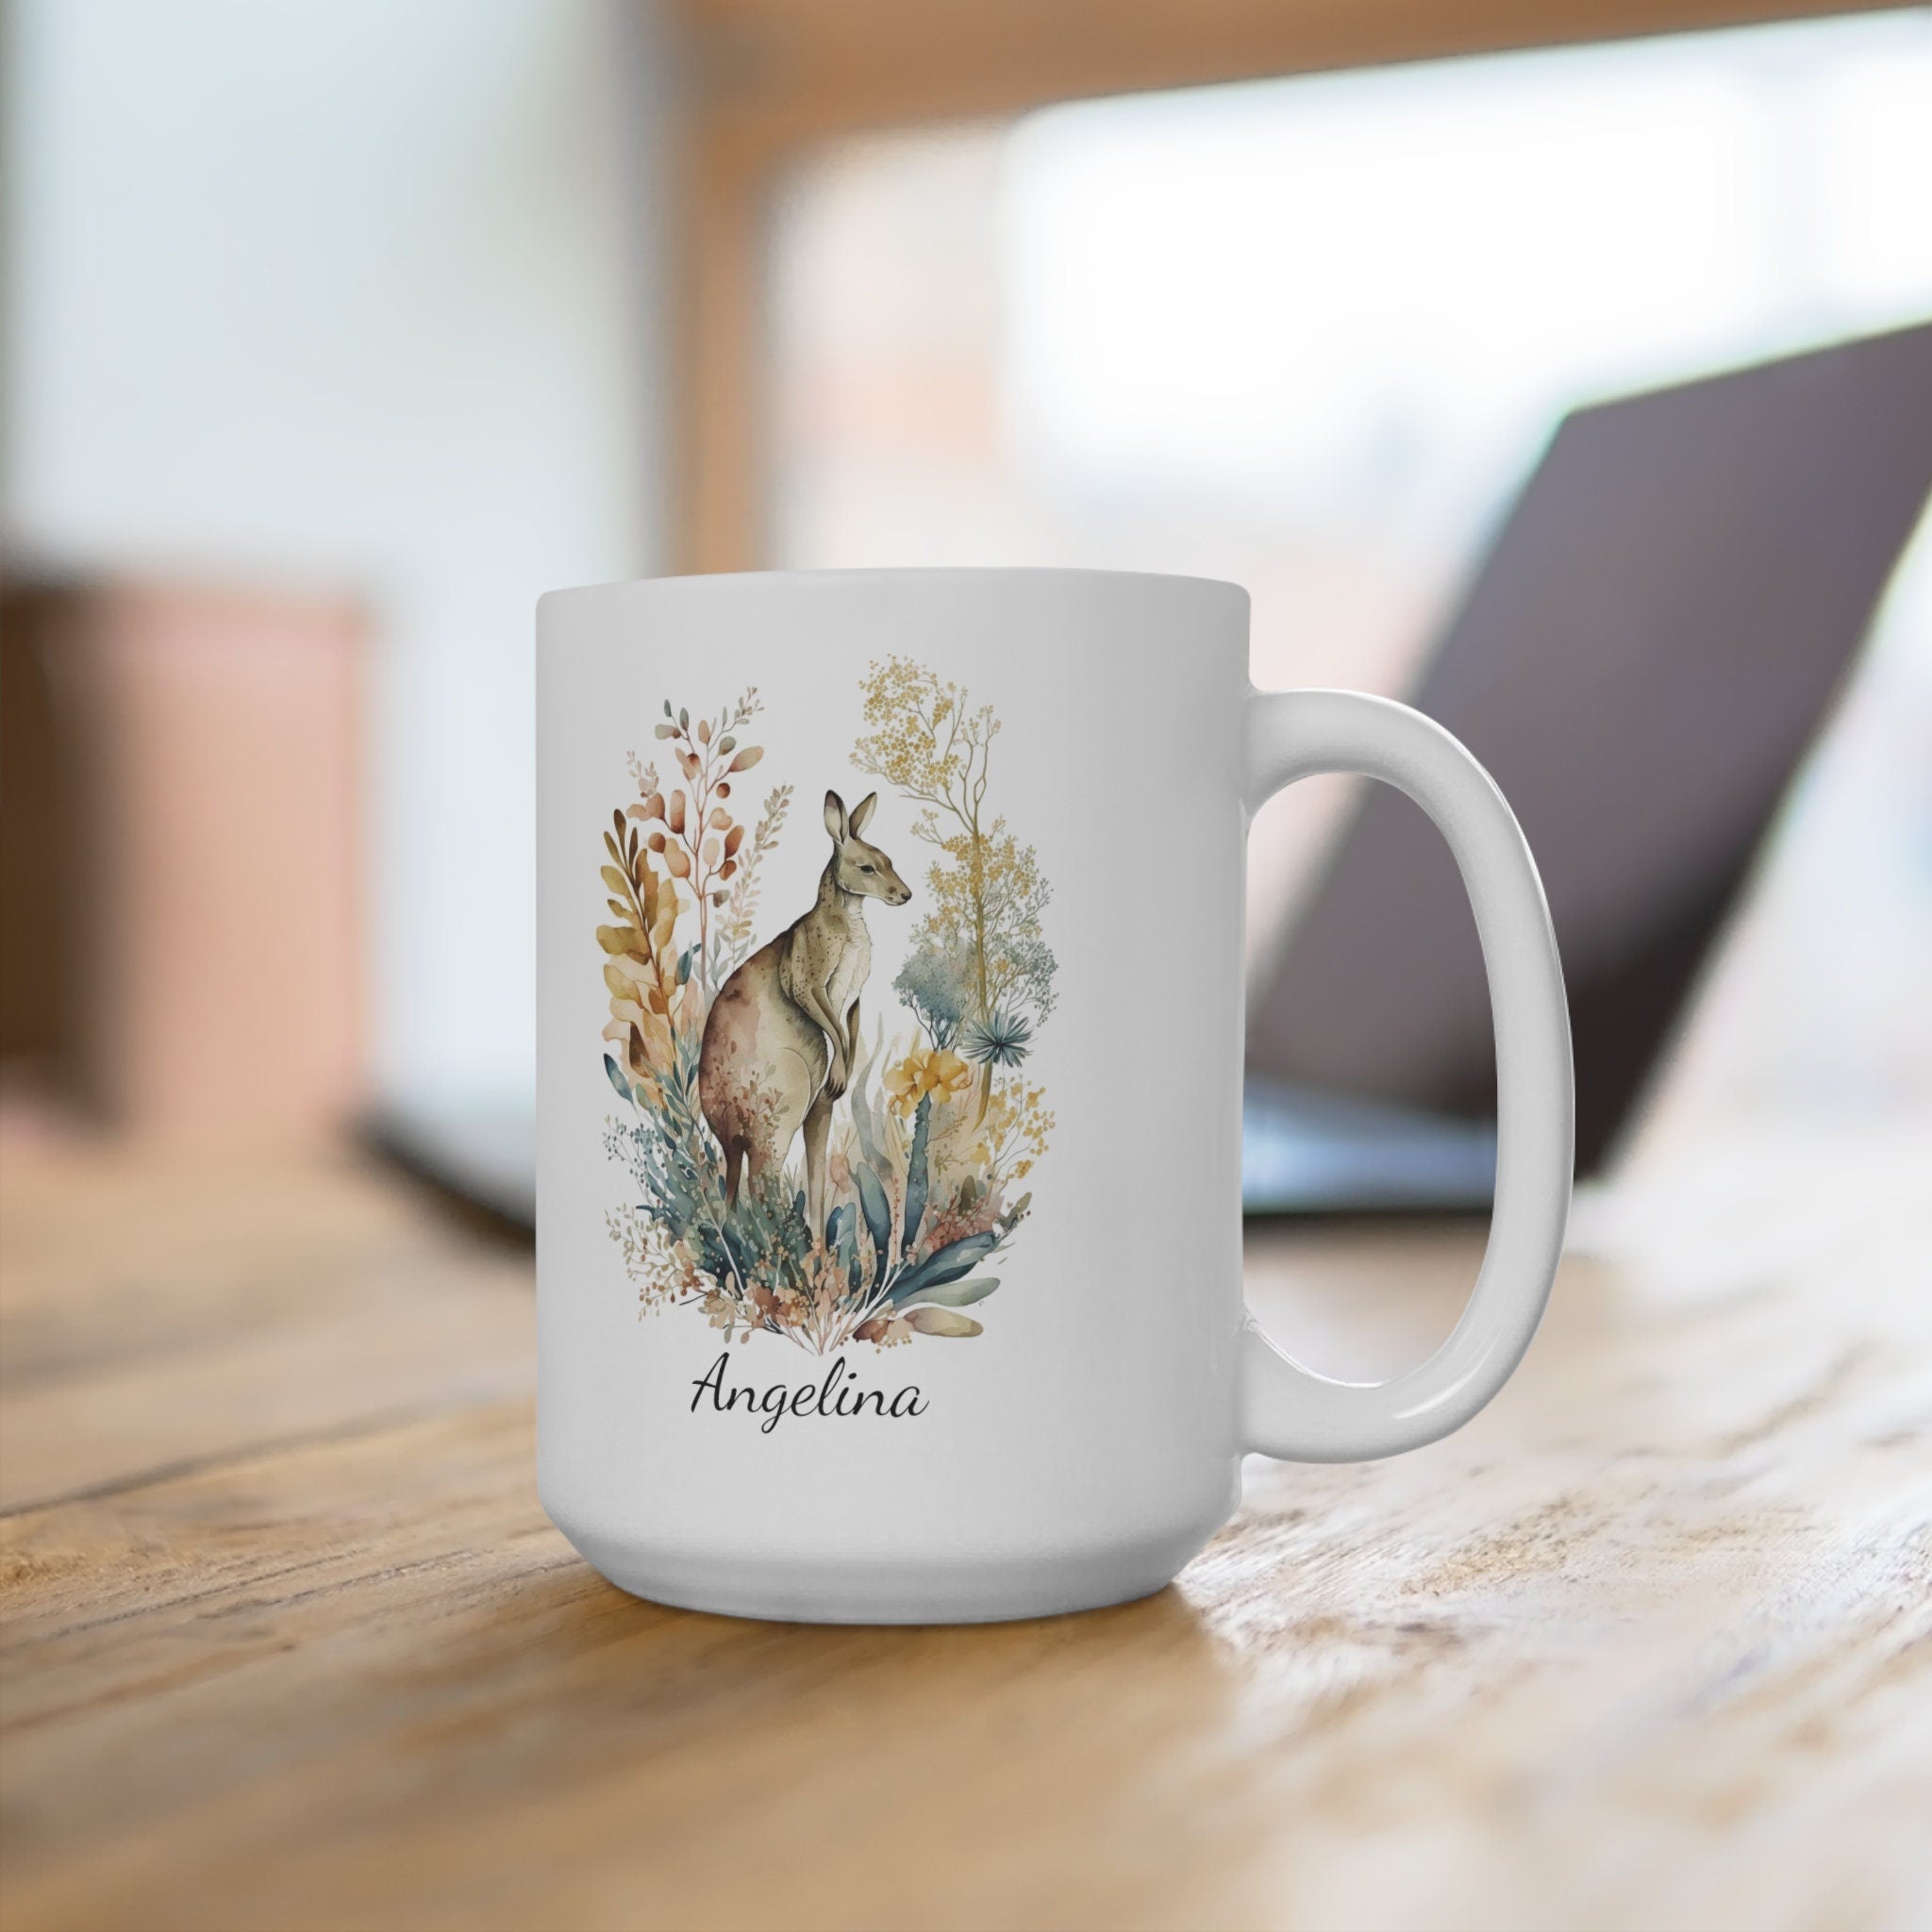 Personalized Kangaroo Coffee Mug